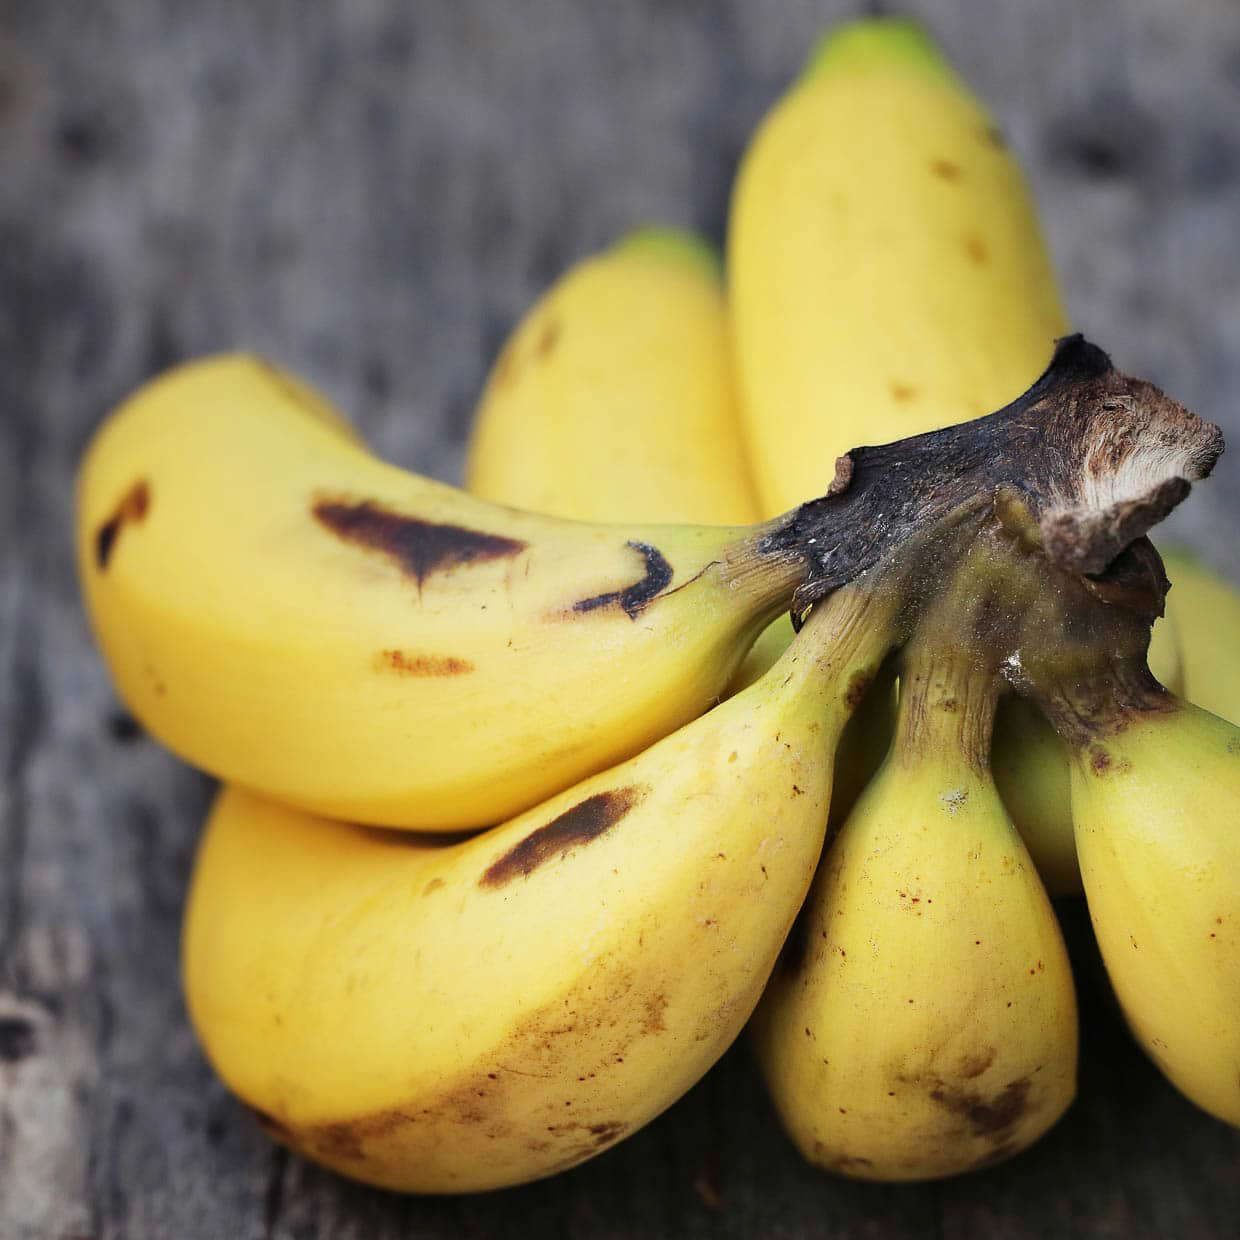 Can Bananas Be Too Ripe for Banana Bread?